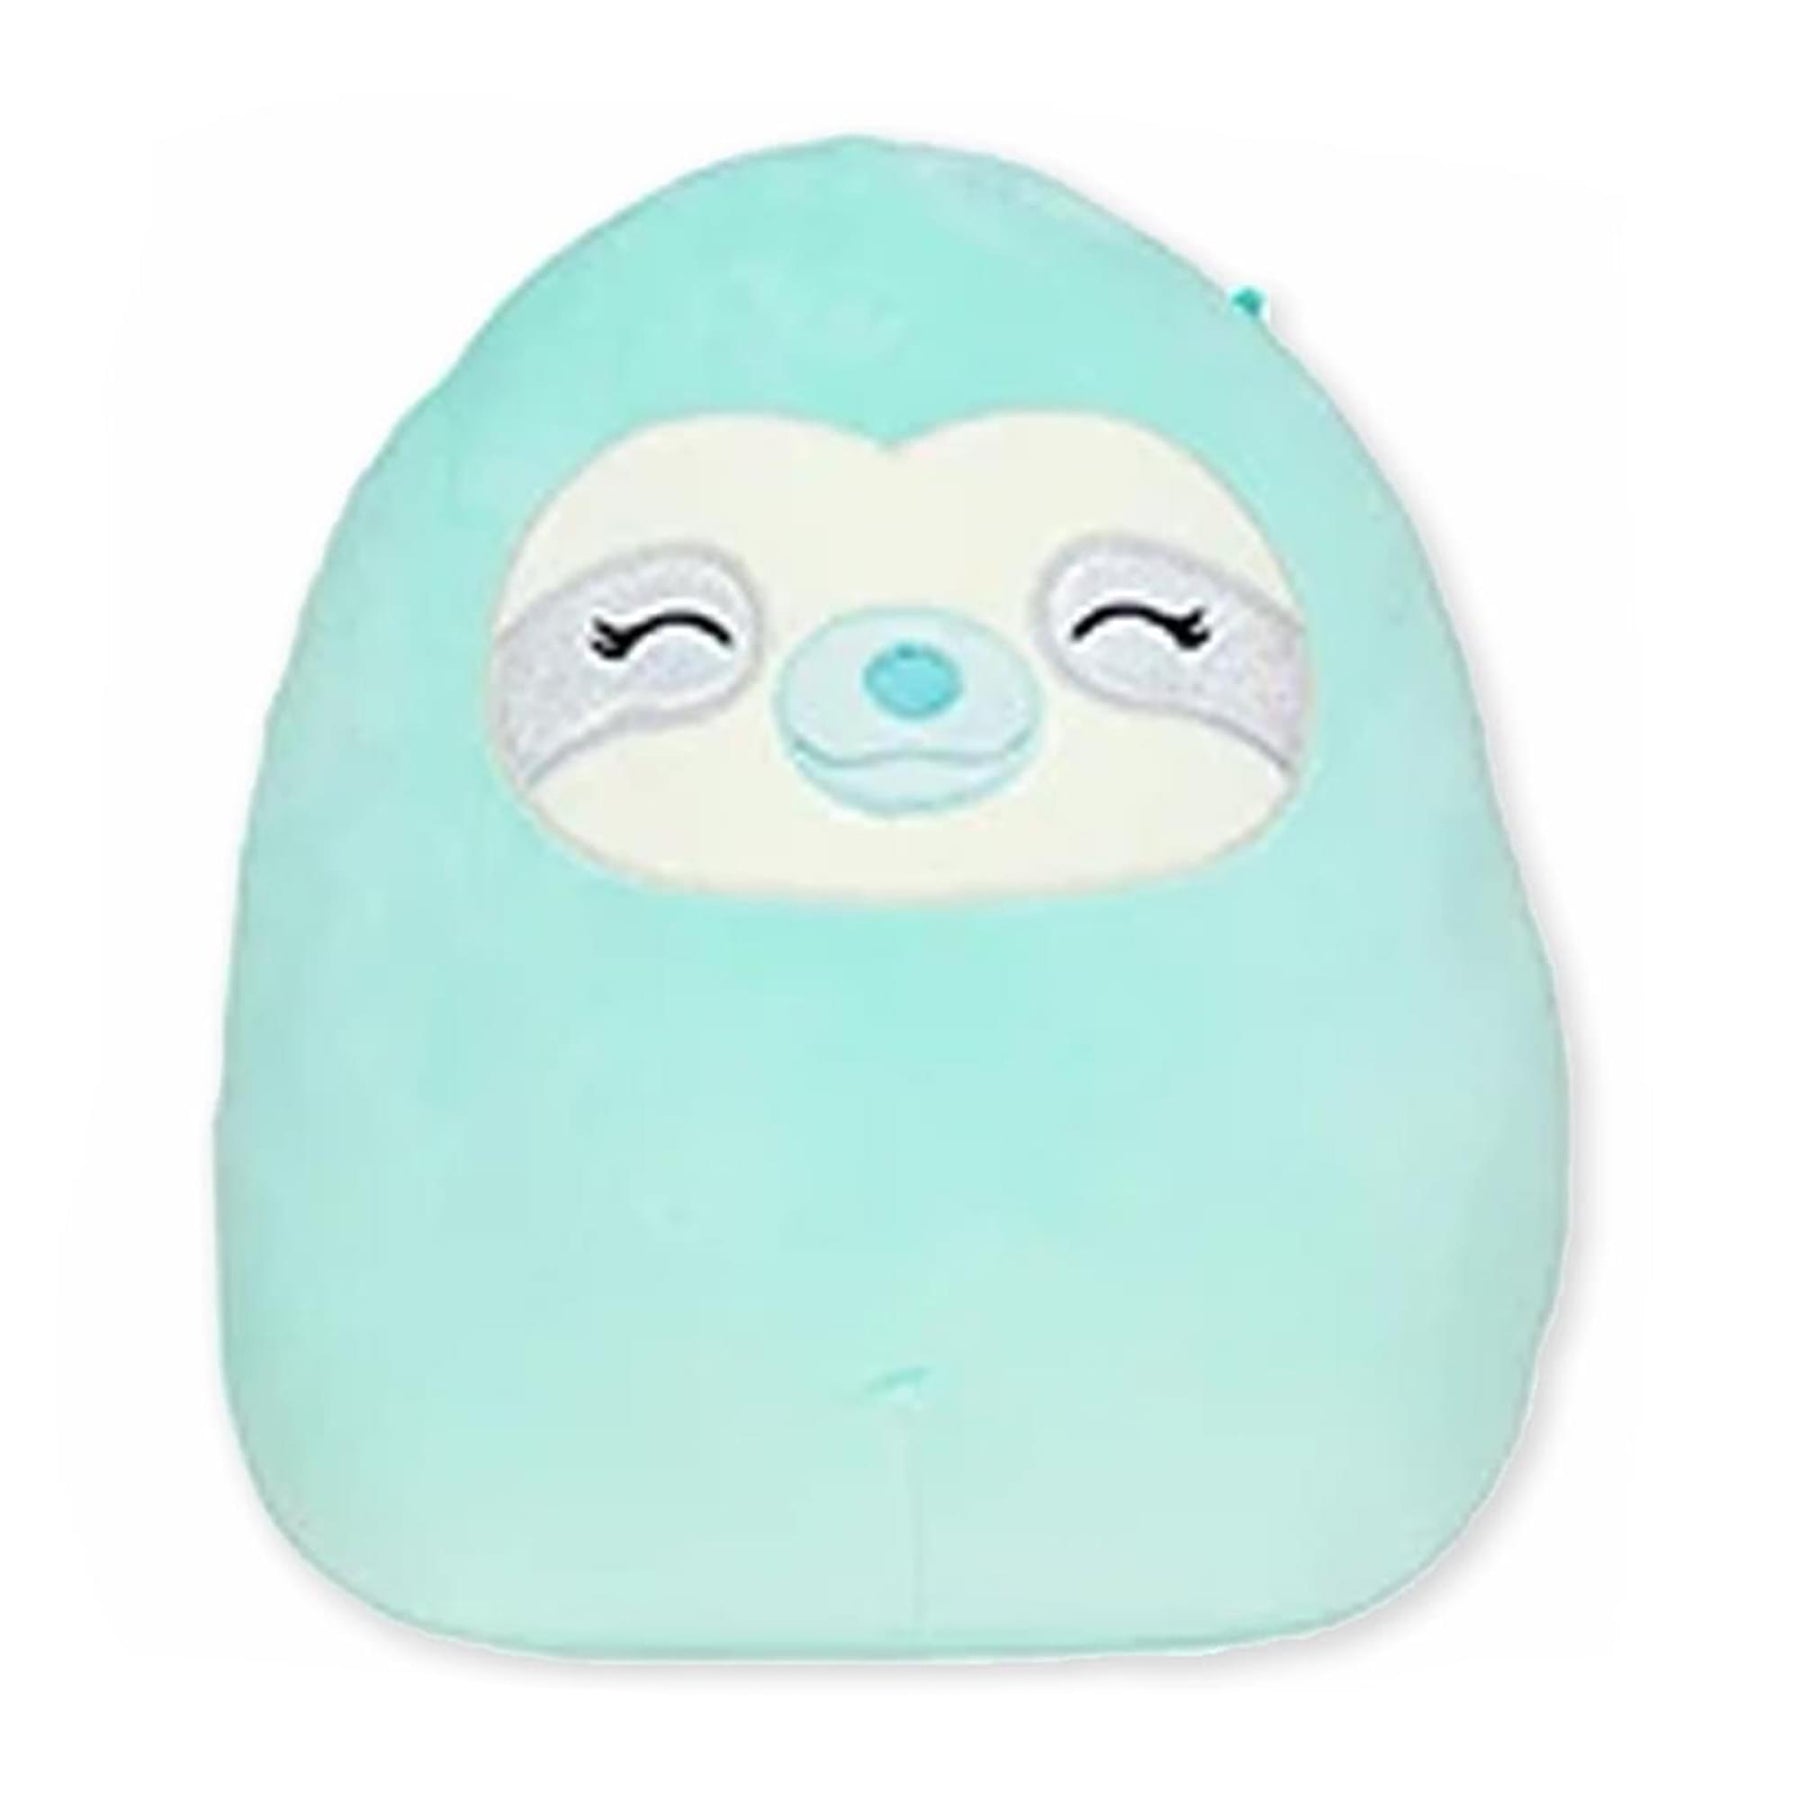 Squishmallow 16 Inch Plush | Aqua the Sleepy Eye Blue Sloth